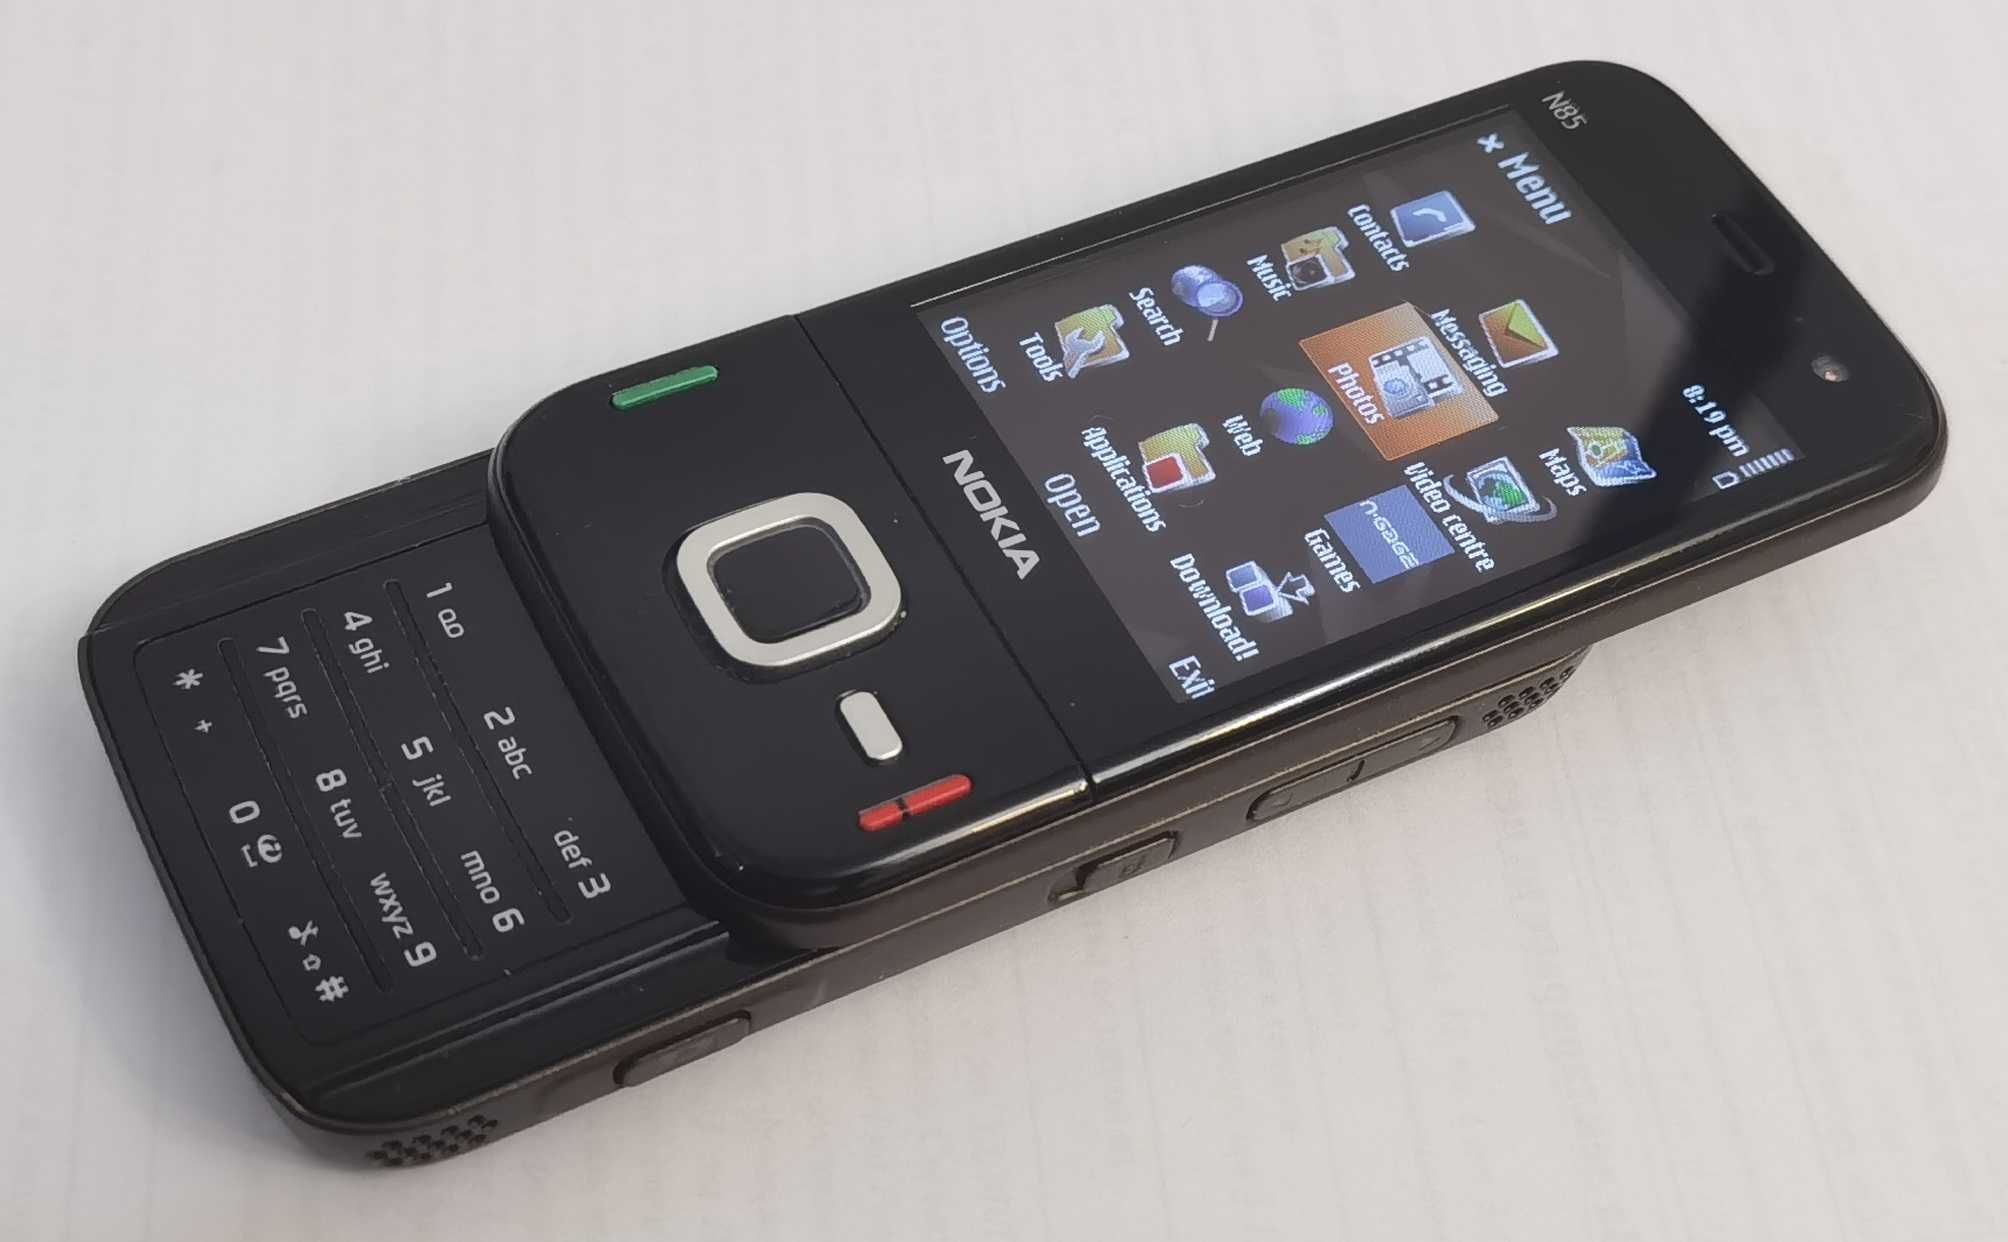 Nokia N85 5.0MP/Wi-Fi/GPS/FM Transmiter Symbian като нов, на 0 минути